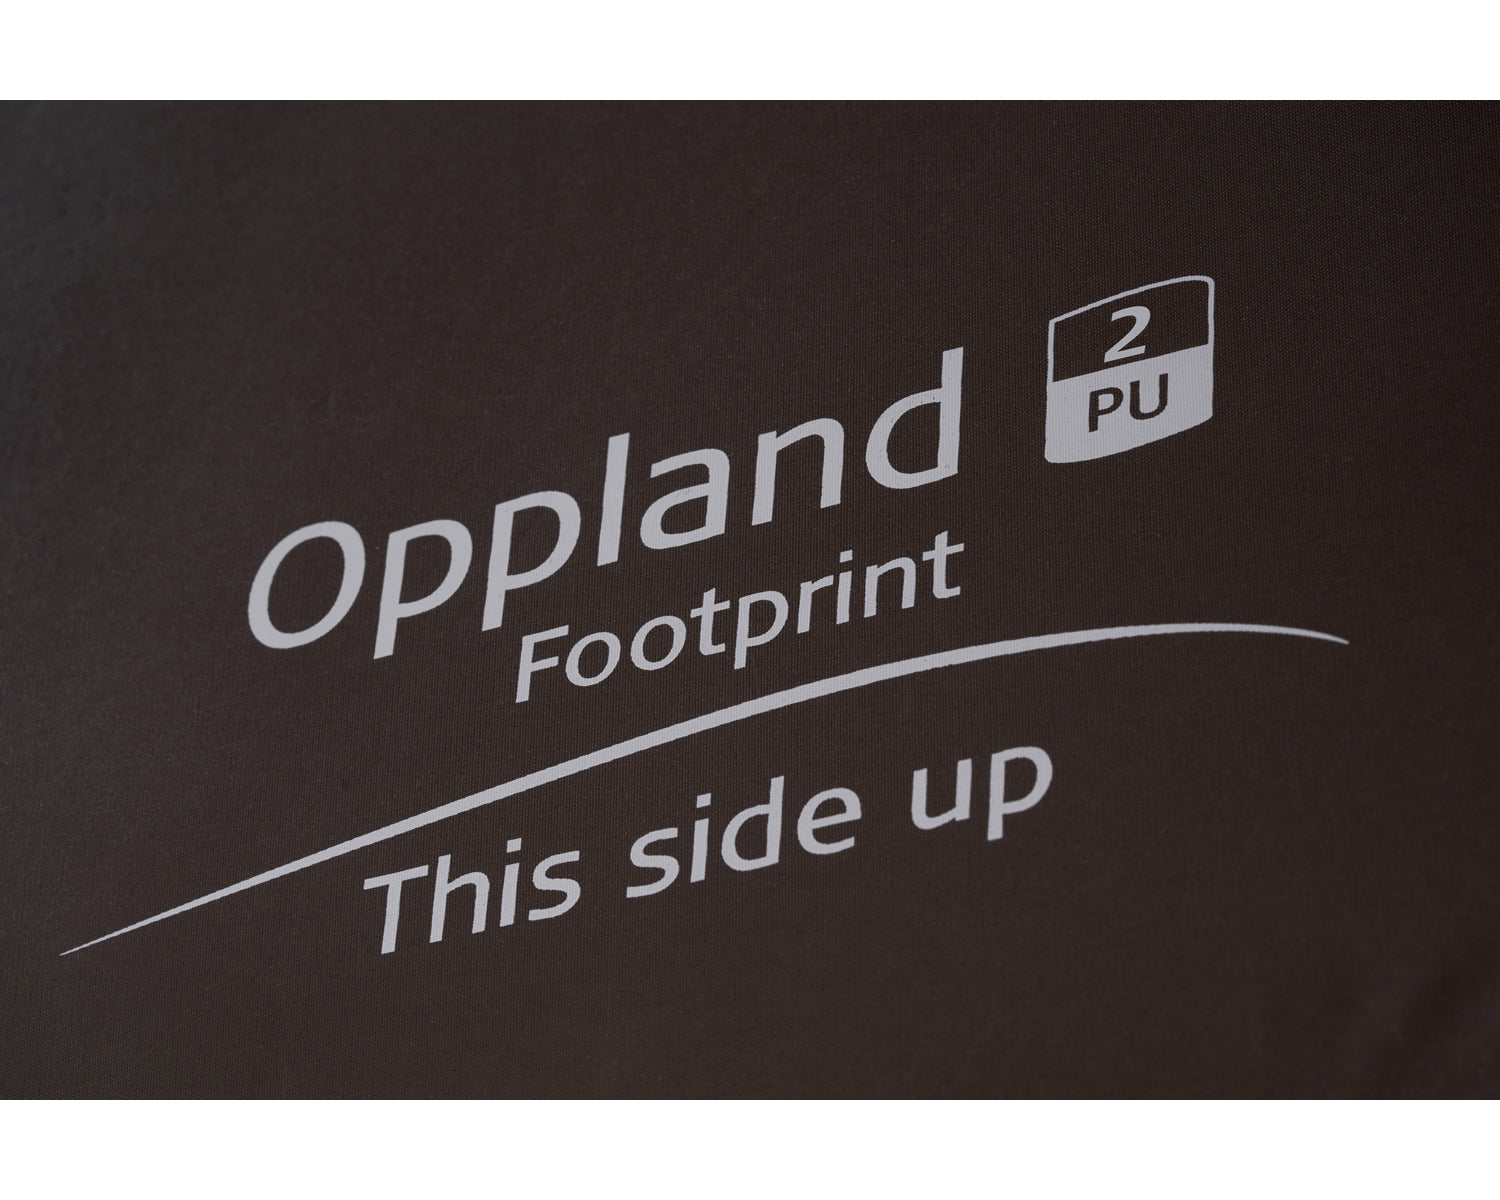 Oppland 2 (2.0) footprint - Demitasse